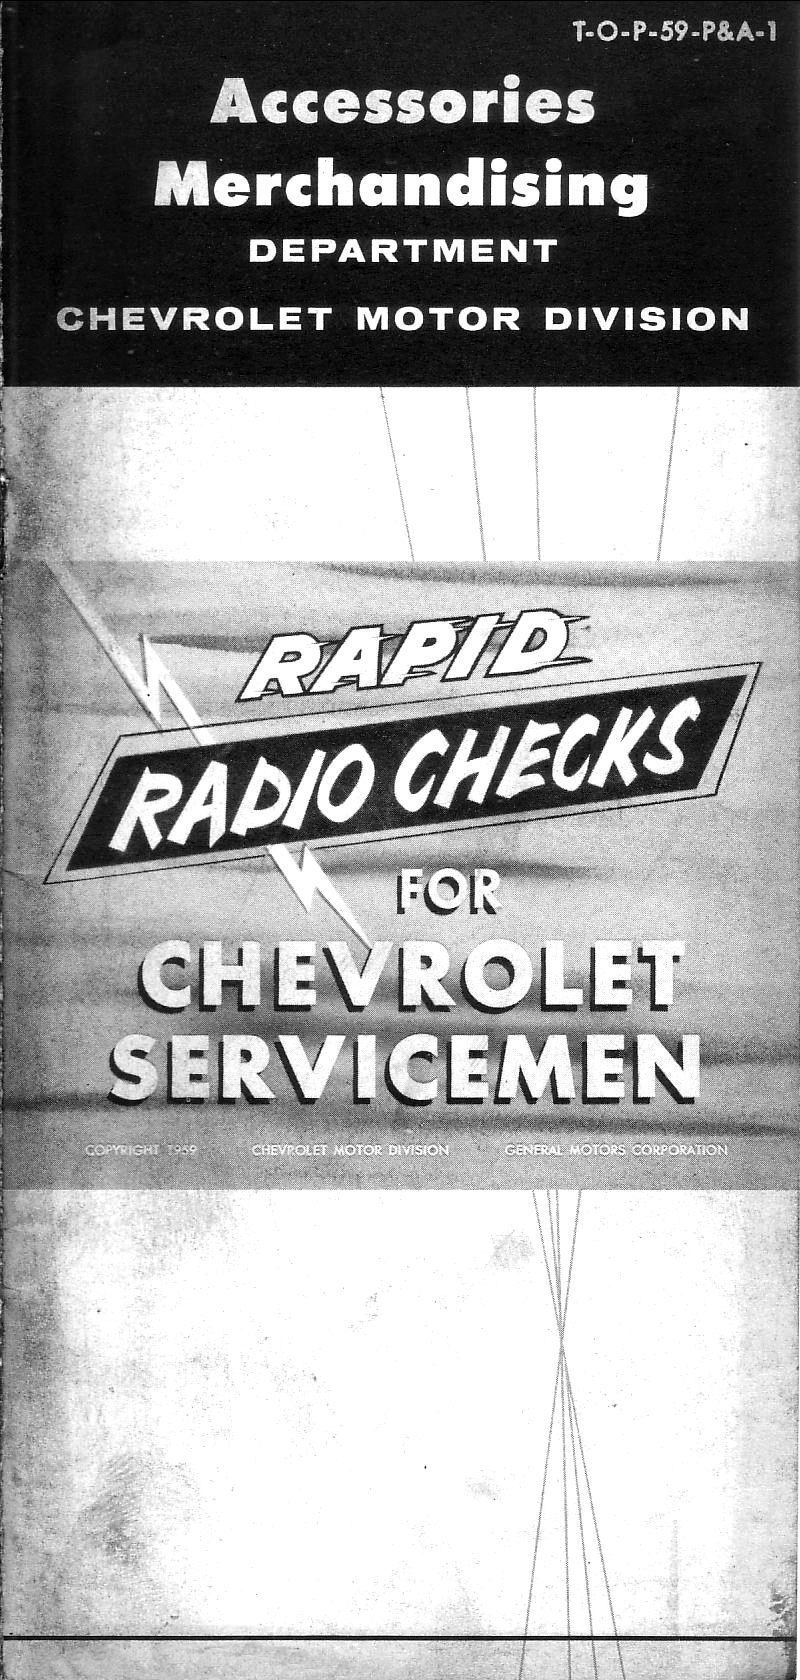 1959 Chevrolet Rapid Radio Checks Booklet